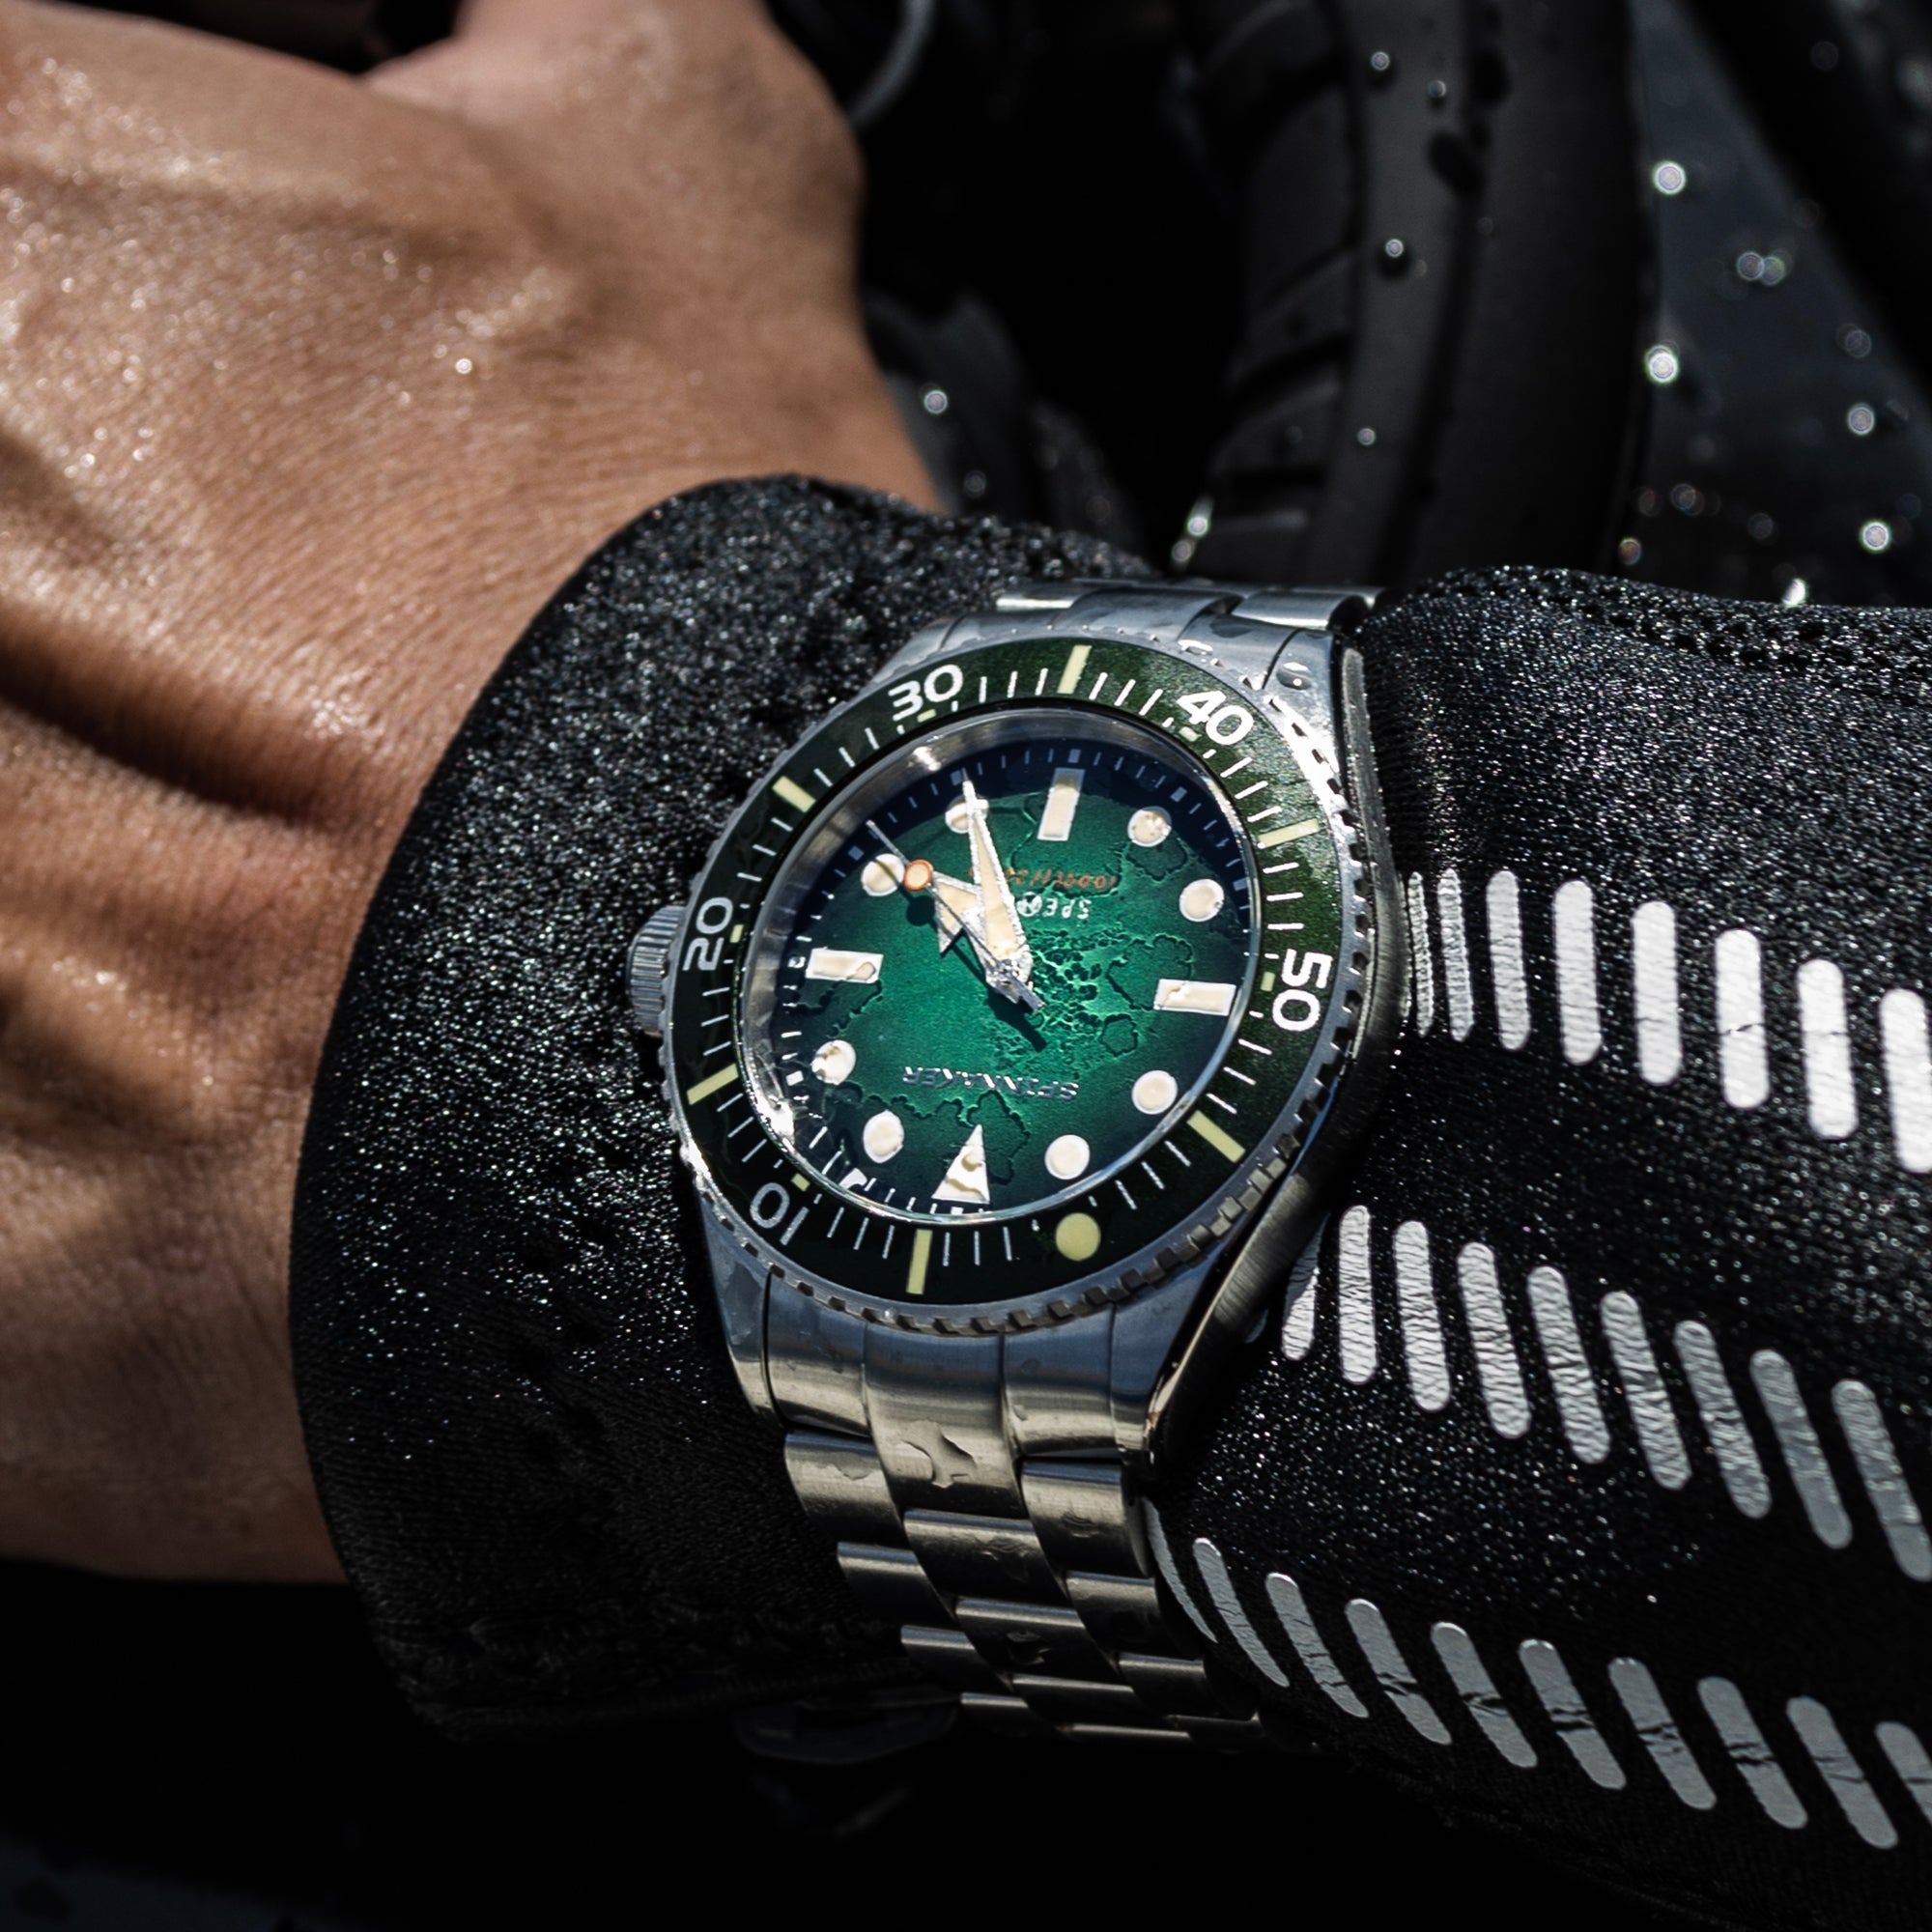 Spinnaker Spinnaker Spence Sea Green Japanese Automatic Men's Watch SP-5097-44